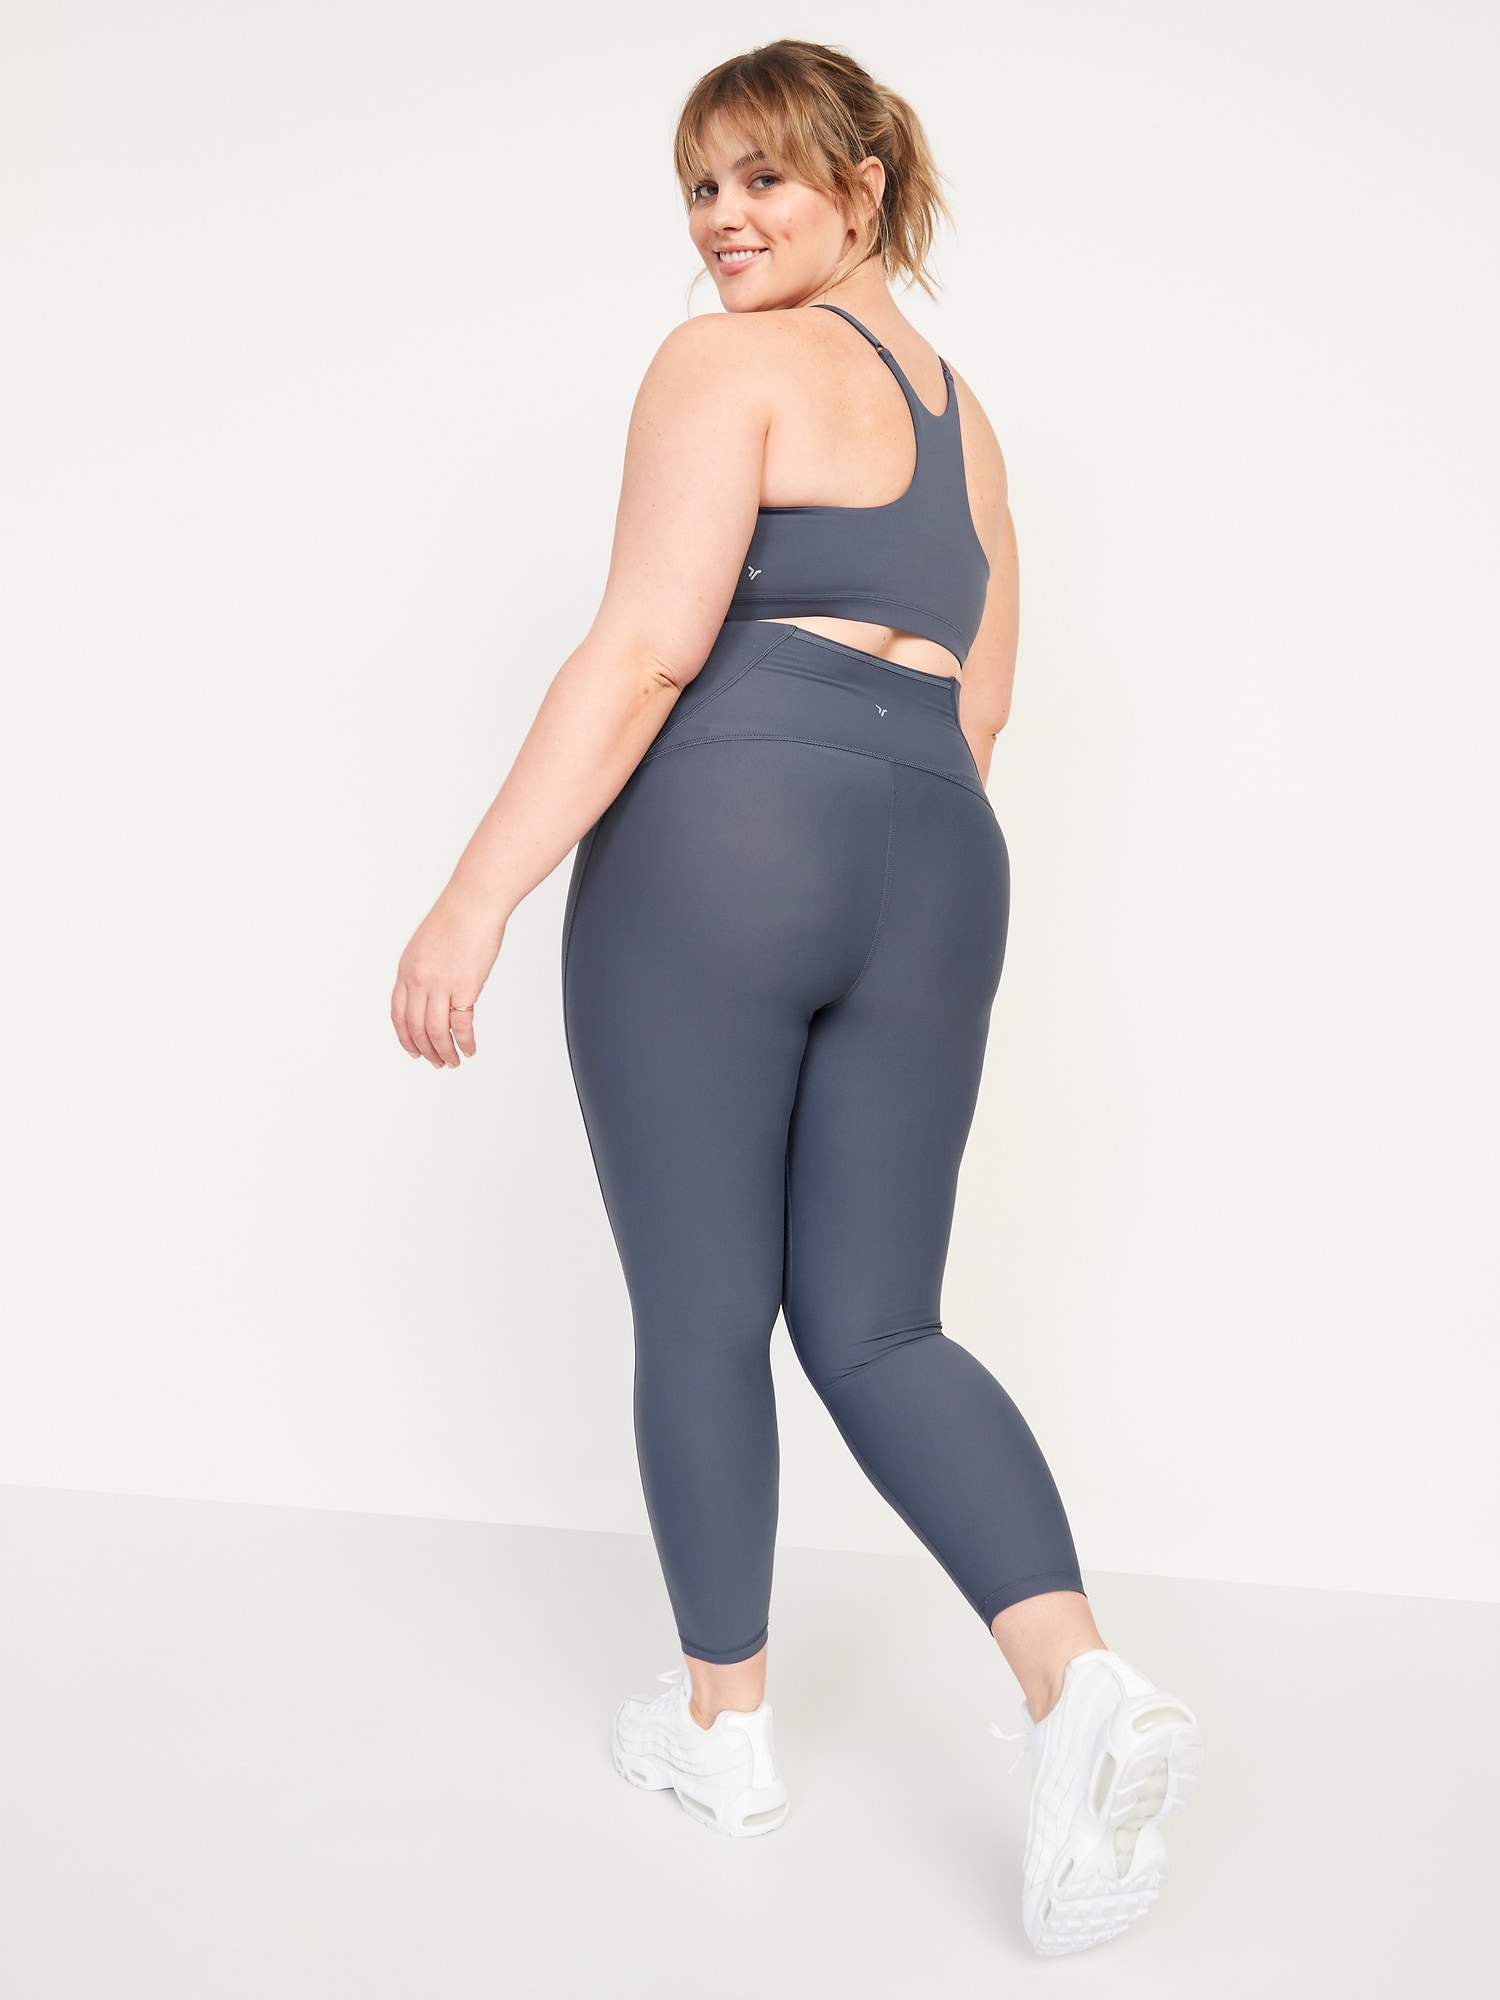 Roaman's Women's Plus Size Essential Stretch Stirrup Legging Activewear  Workout Yoga Pants - 12, Black at Amazon Women's Clothing store